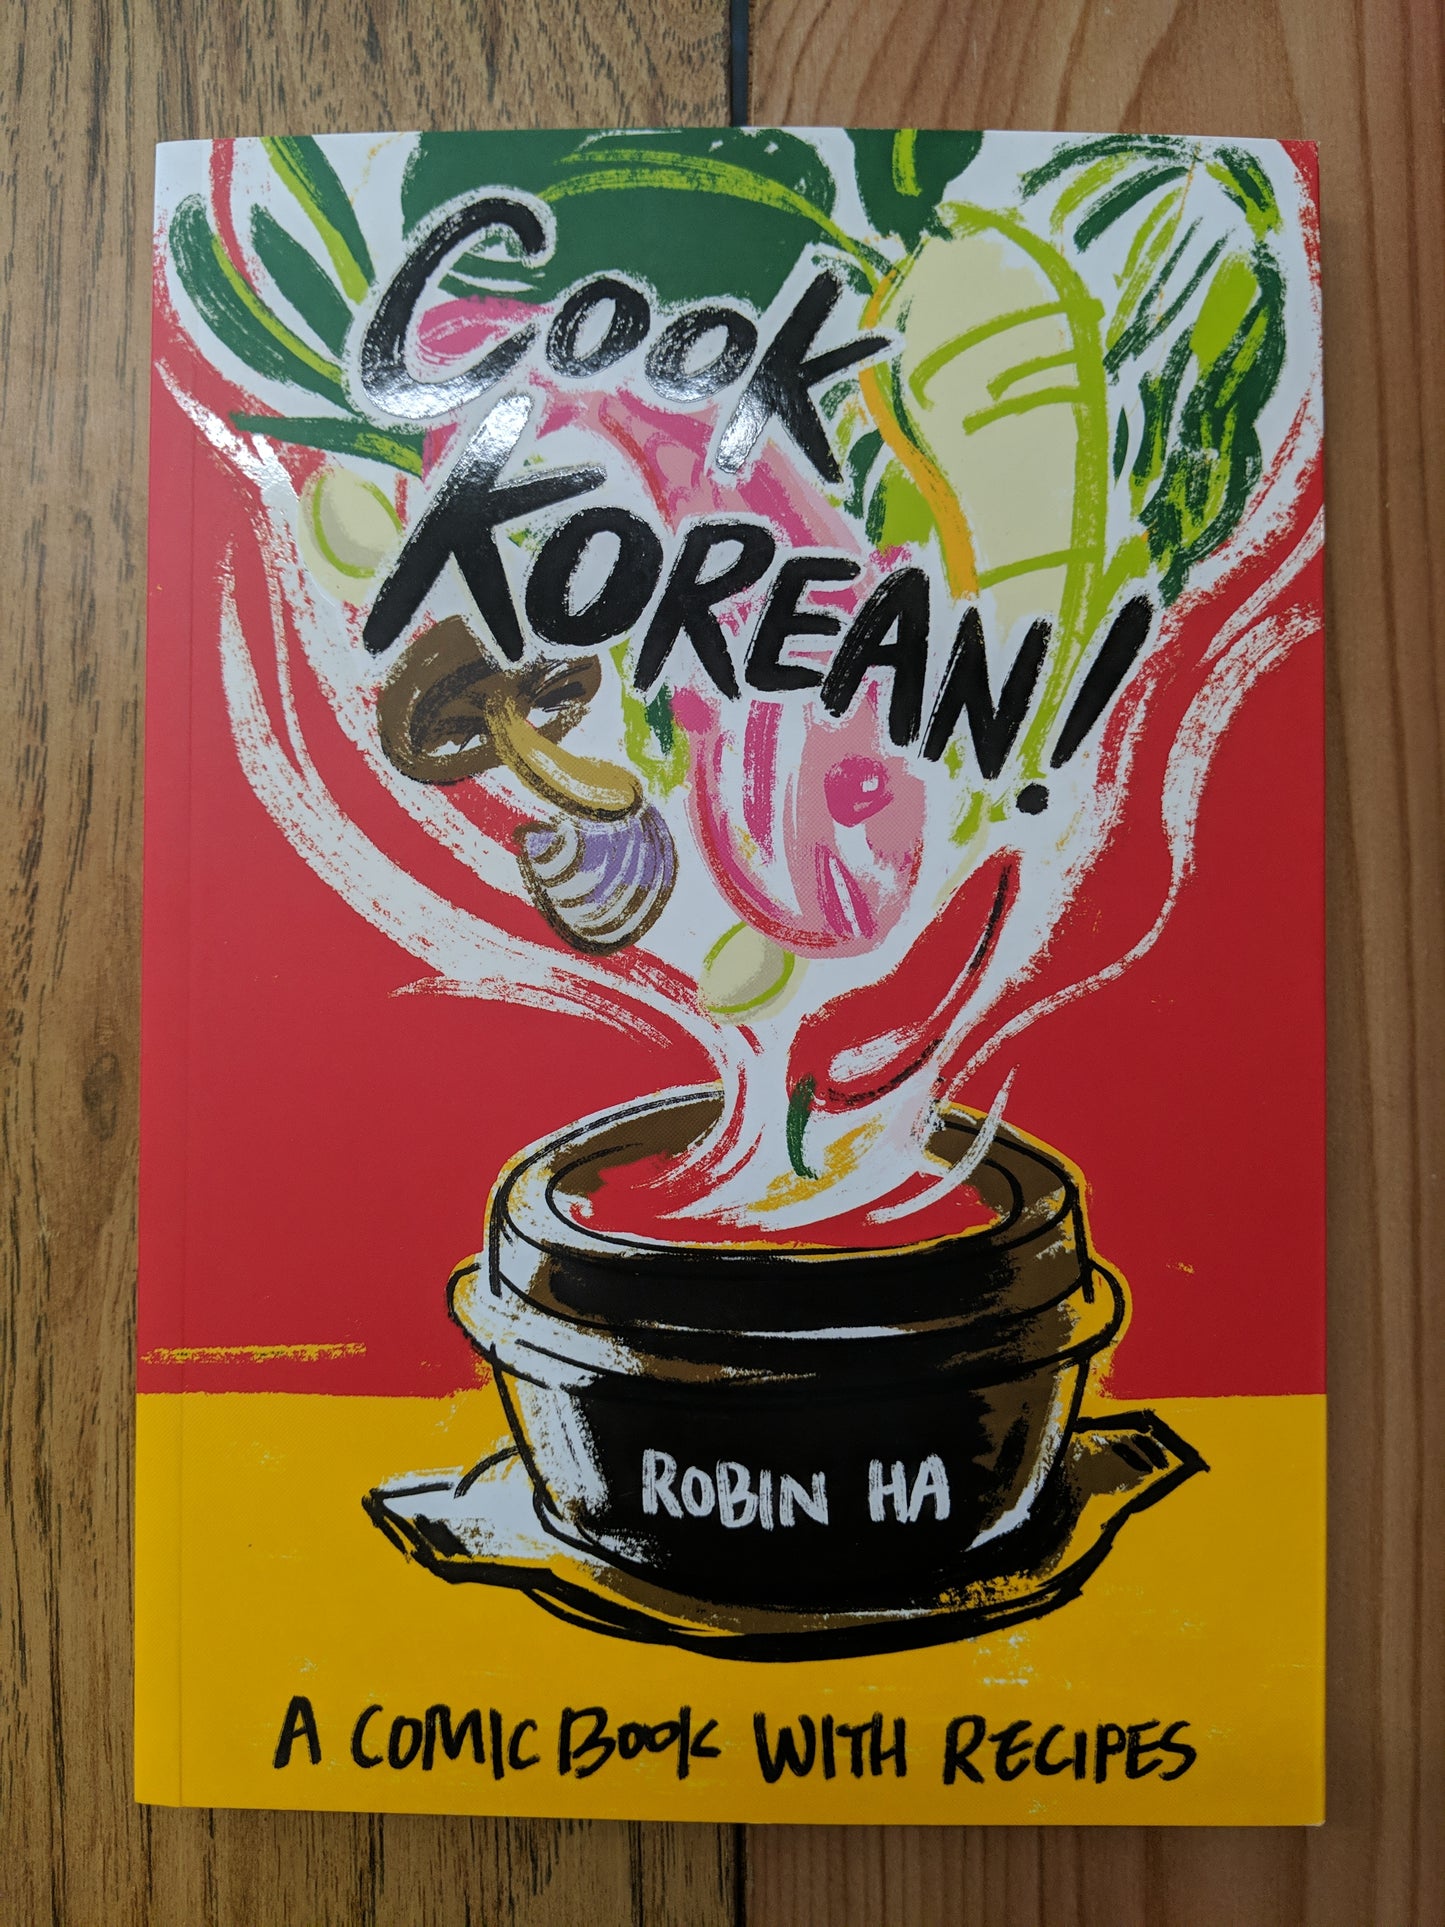 Cook Korean! A Comic Book with Recipes